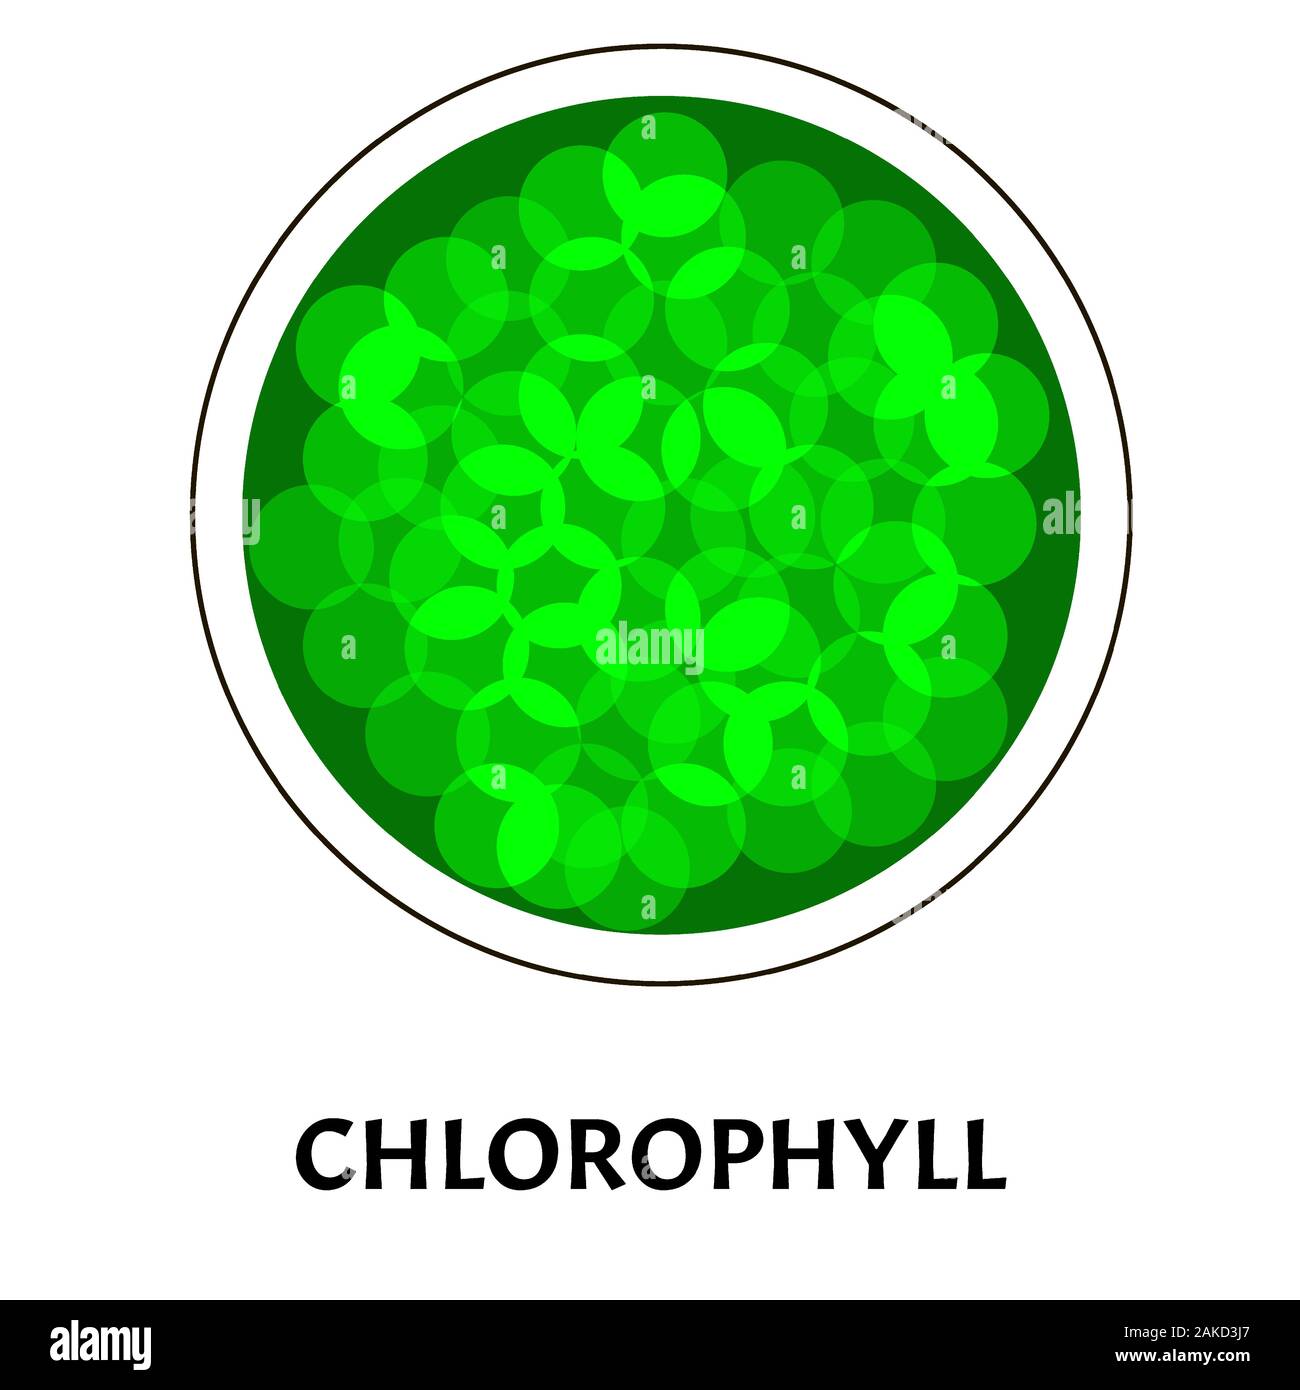 Chlorophyll. Grüne Färbung der Blätter. Chlorophyll Struktur. Vector Illustration auf isolierte Hintergrund. Stock Vektor